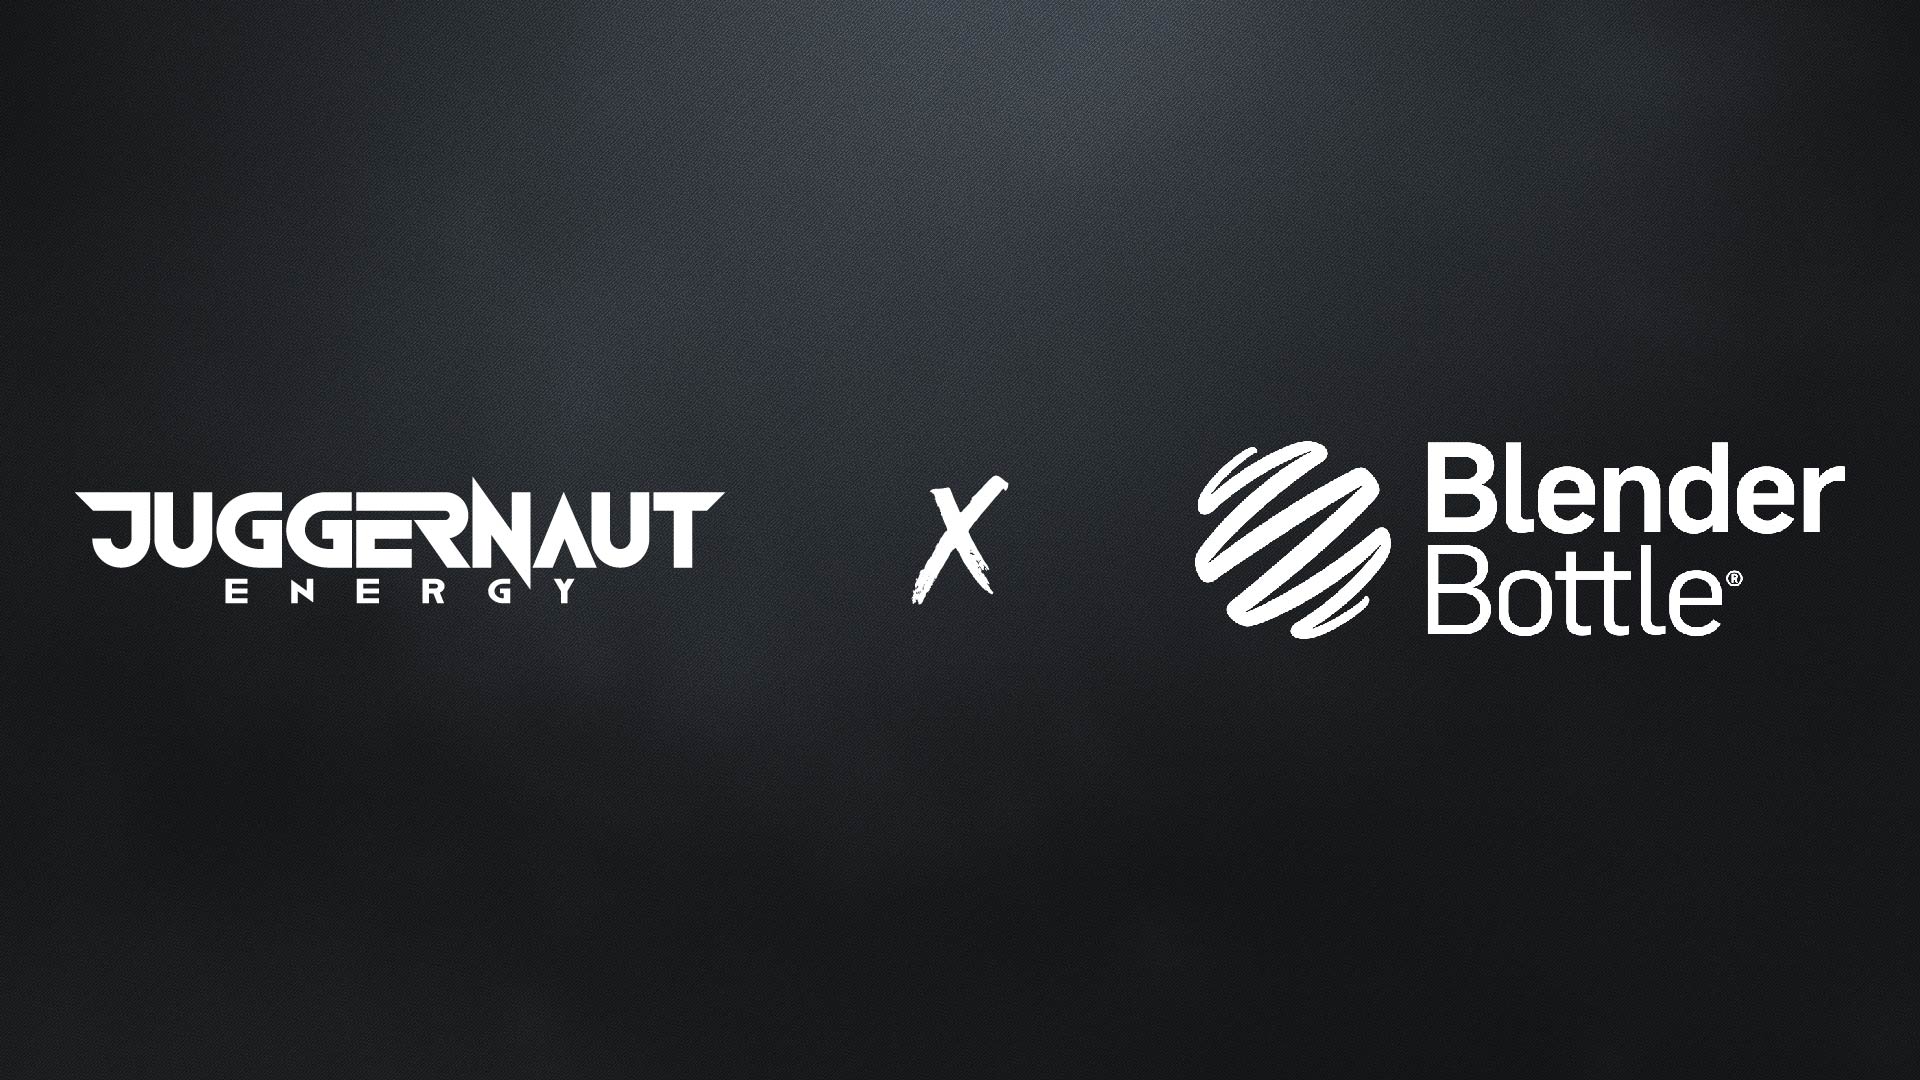 Juggernaut Energy x BlenderBottle Launch Partnership